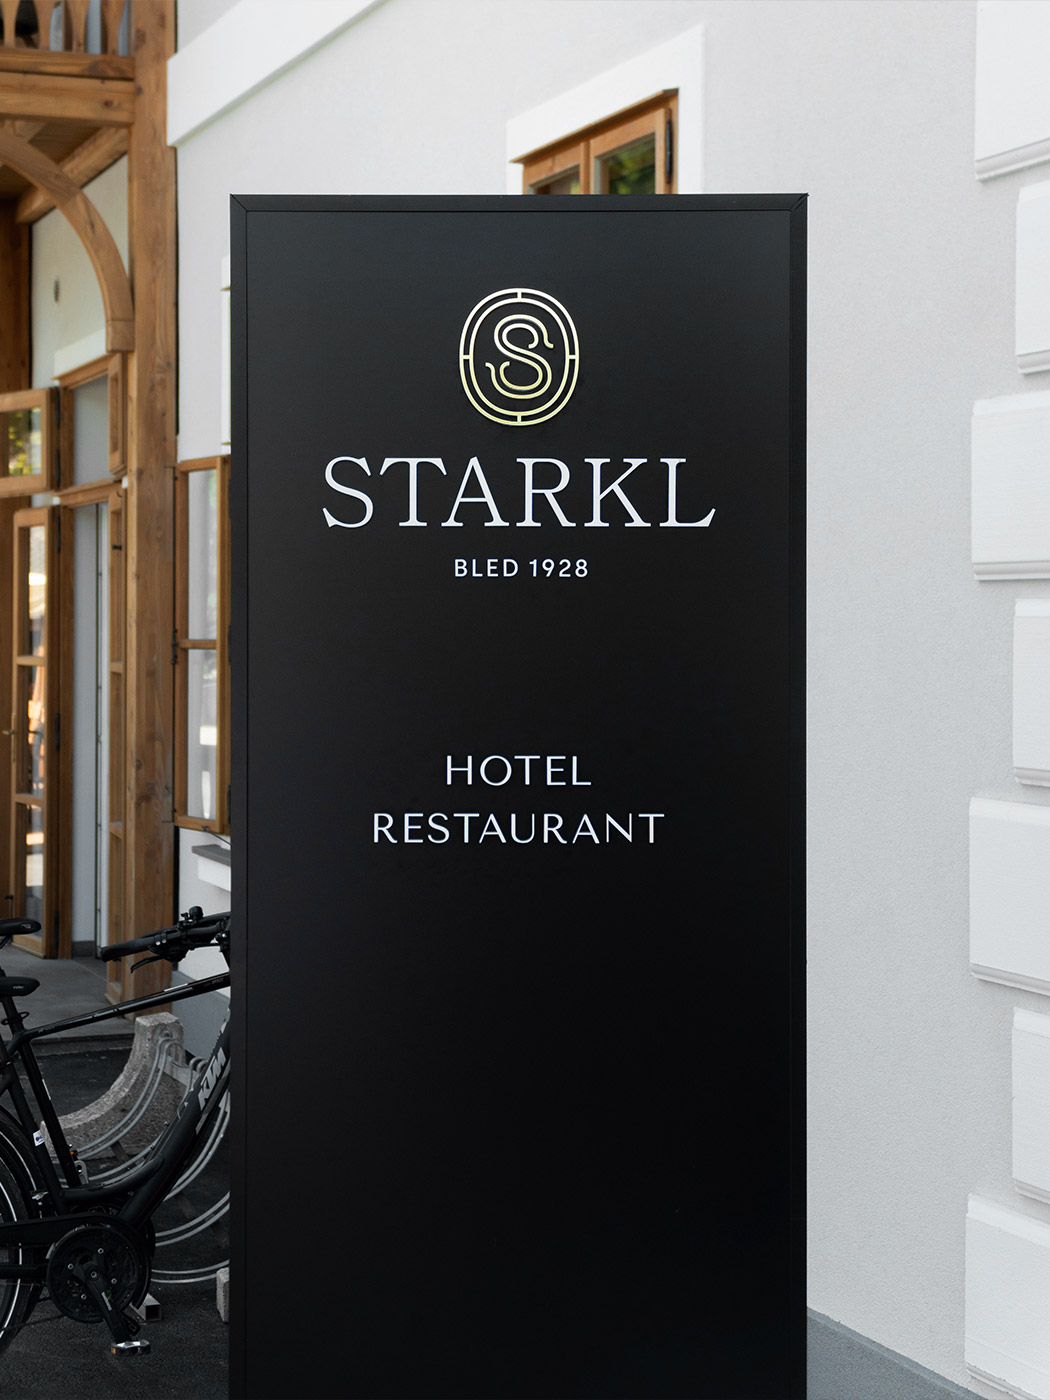 Studio-Hrastar-Hotel-Starkl-Outdoor-Signage